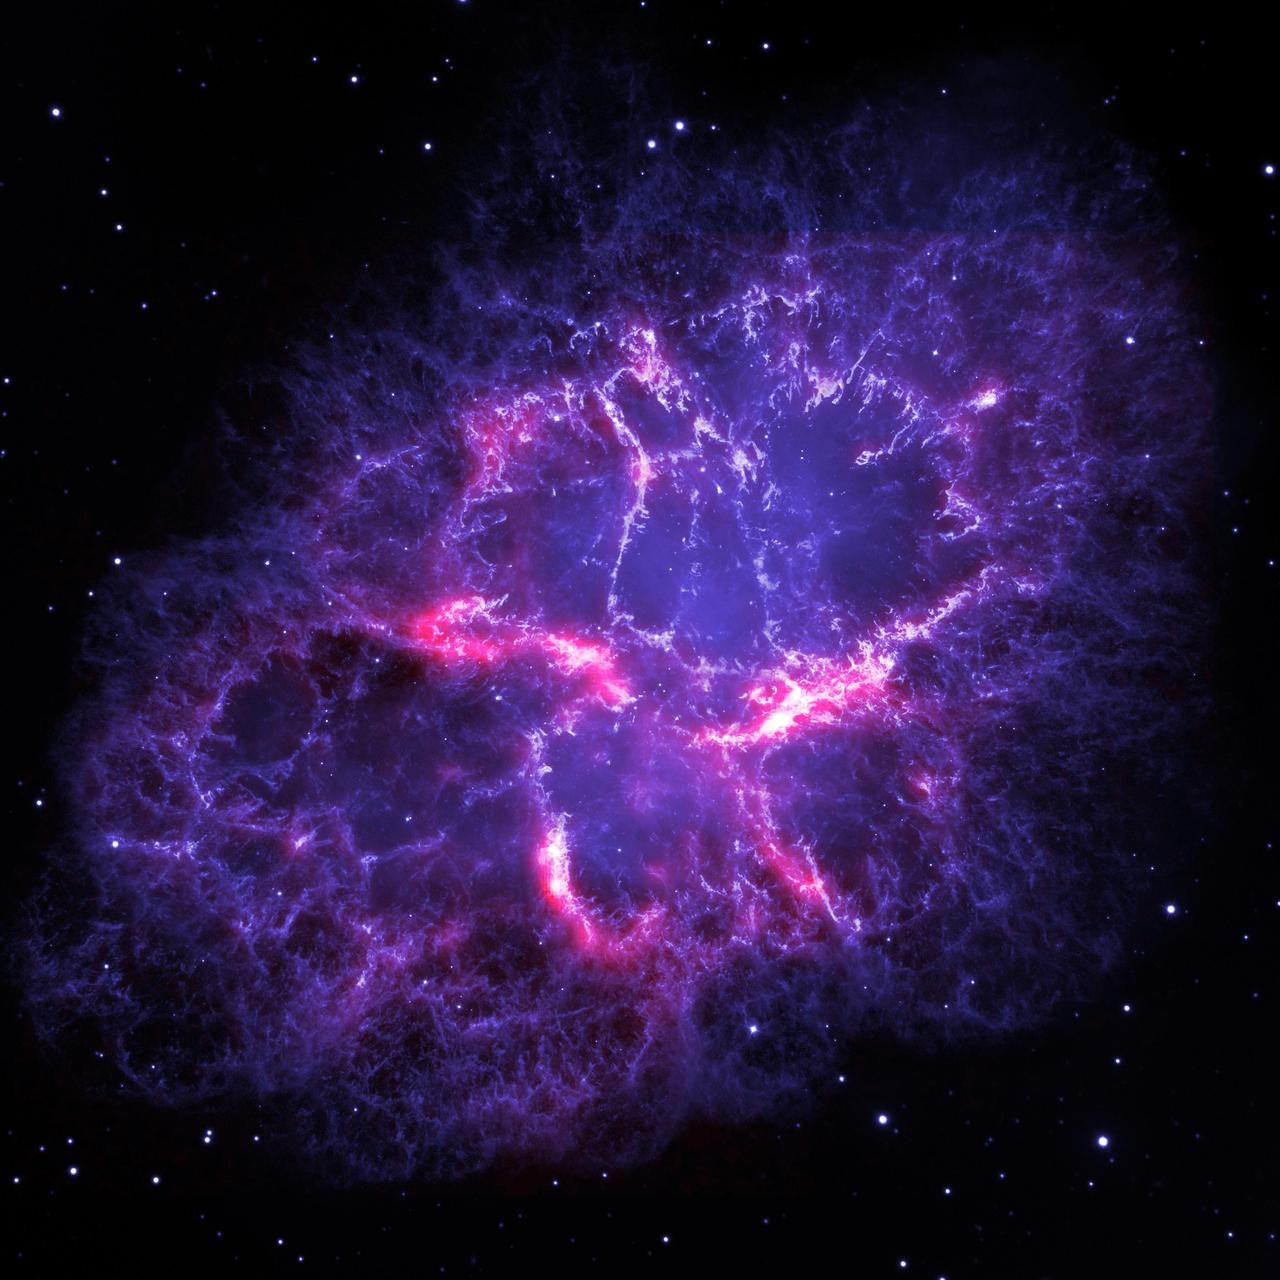 A nebulosa do Carangueijo, uma nebulosa remanescente na Via Láctea, vista pelo Telescópio Hubble do Herschel Space Observator (Foto: ESA/Herschel/PACS/MESS Key Programme Supernova Remnant Team; NASA, ESA and Allison Loll/Jeff Hester Arizona State University)